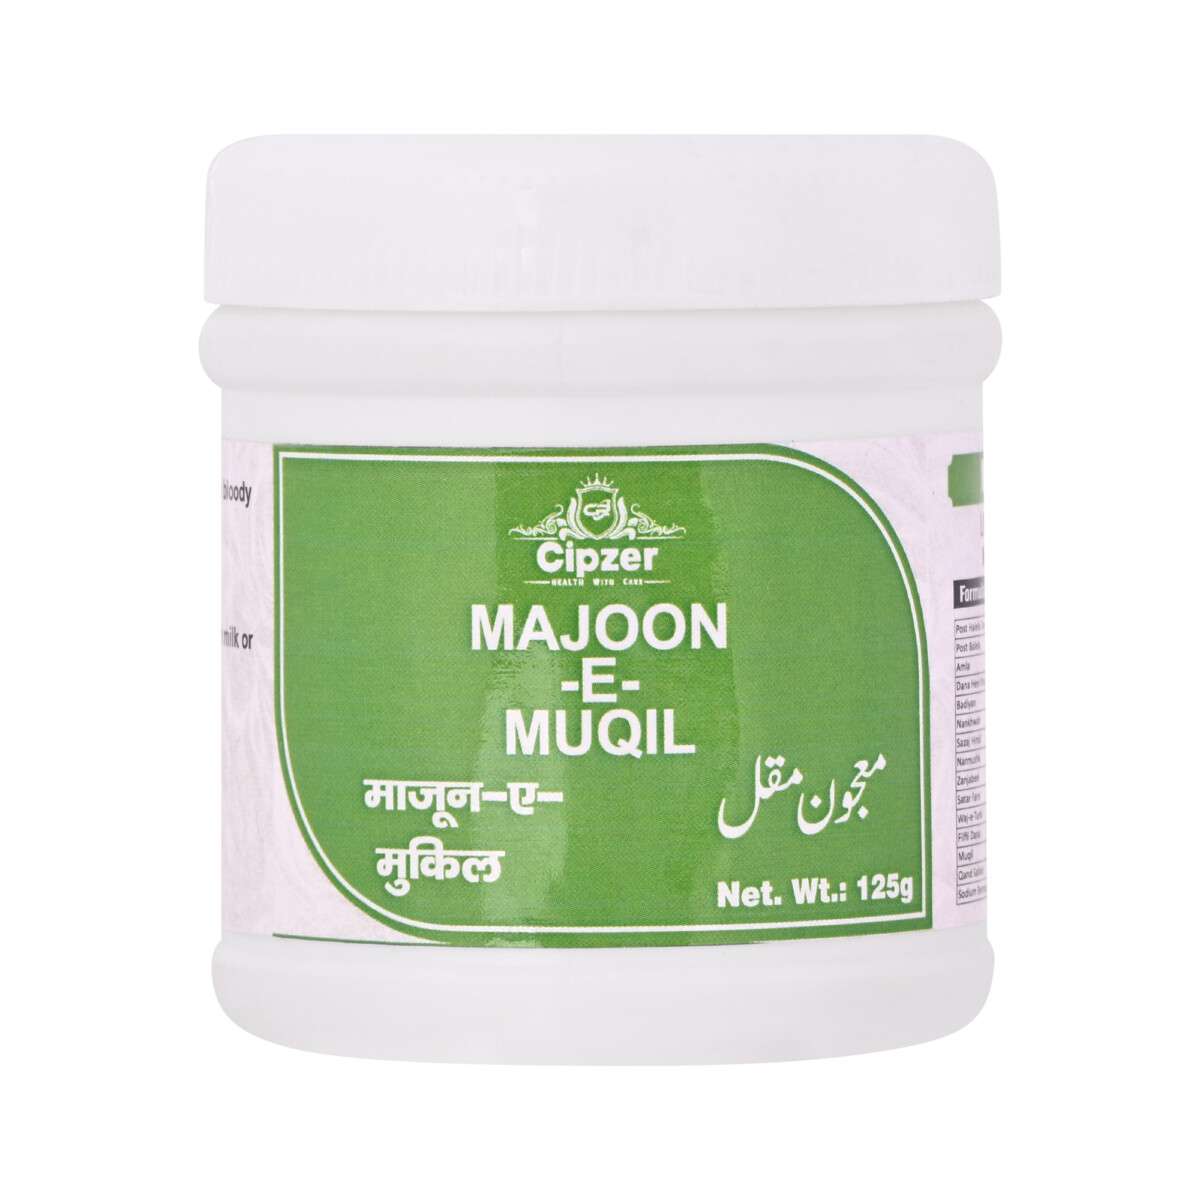 Cipzer Majoon-e-Muqil